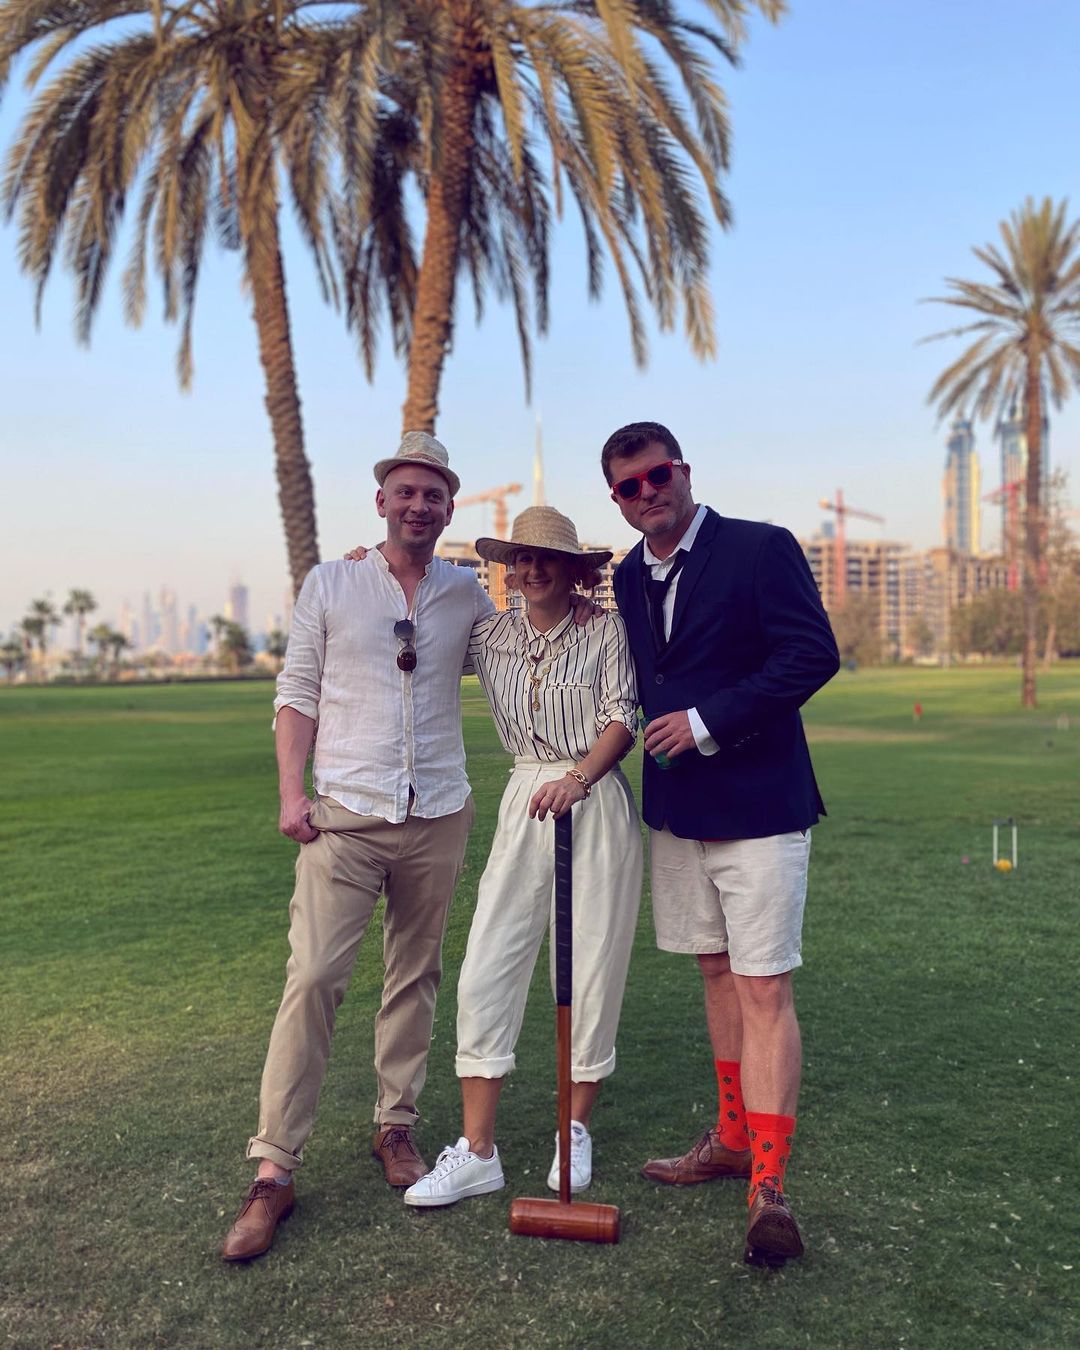 Fashionable Dubai people at the croquet